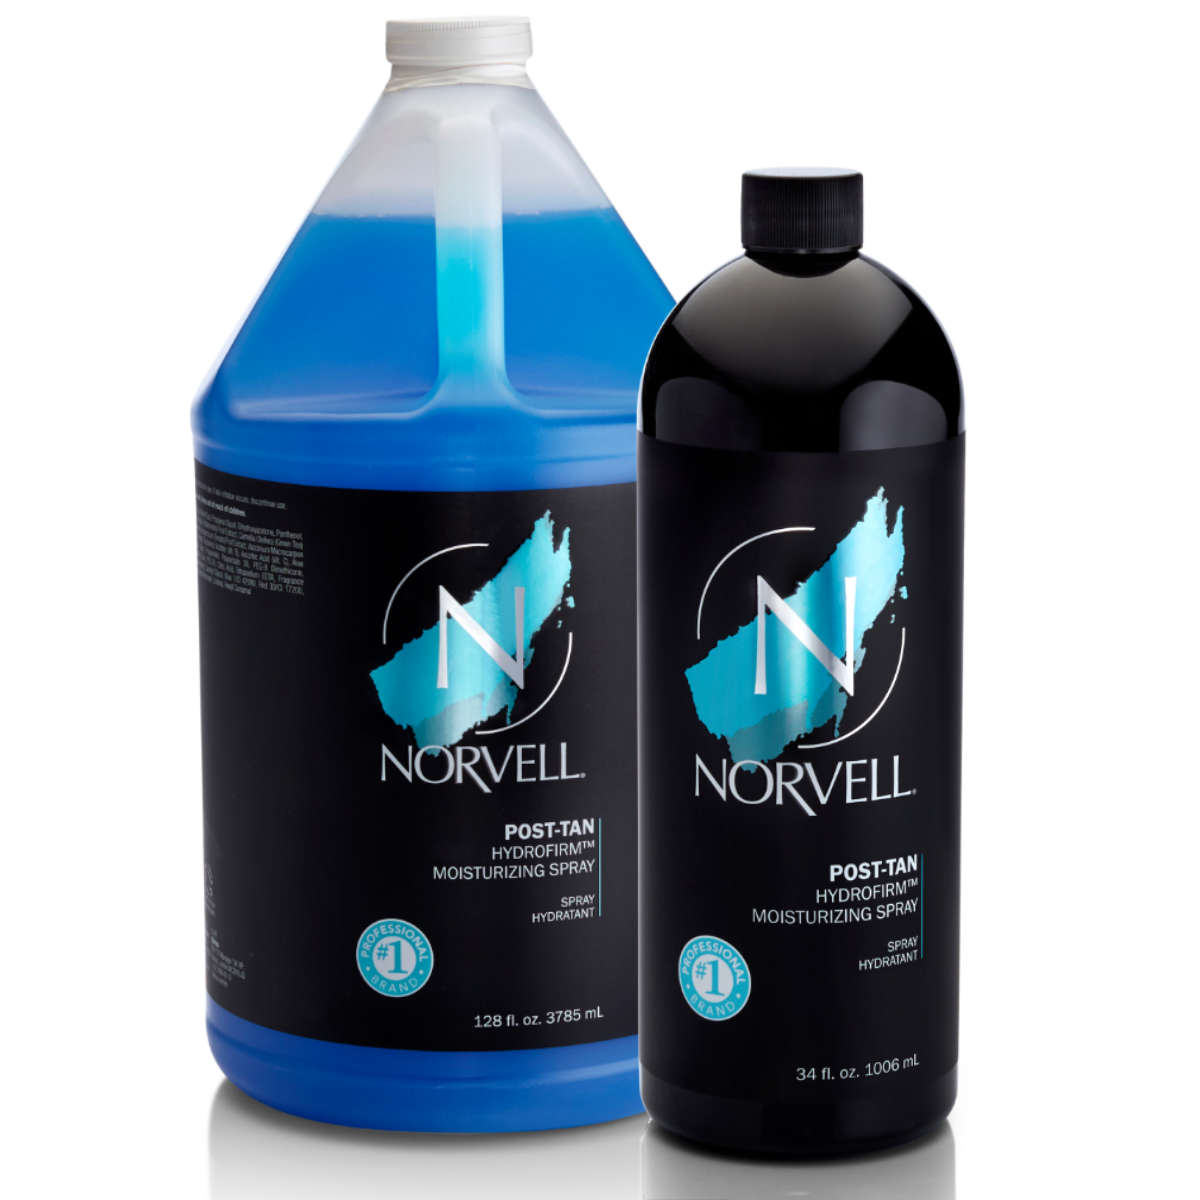 Norvell Post Tan Hydrofirm Moisturizing Spray Summer Sheen Pro